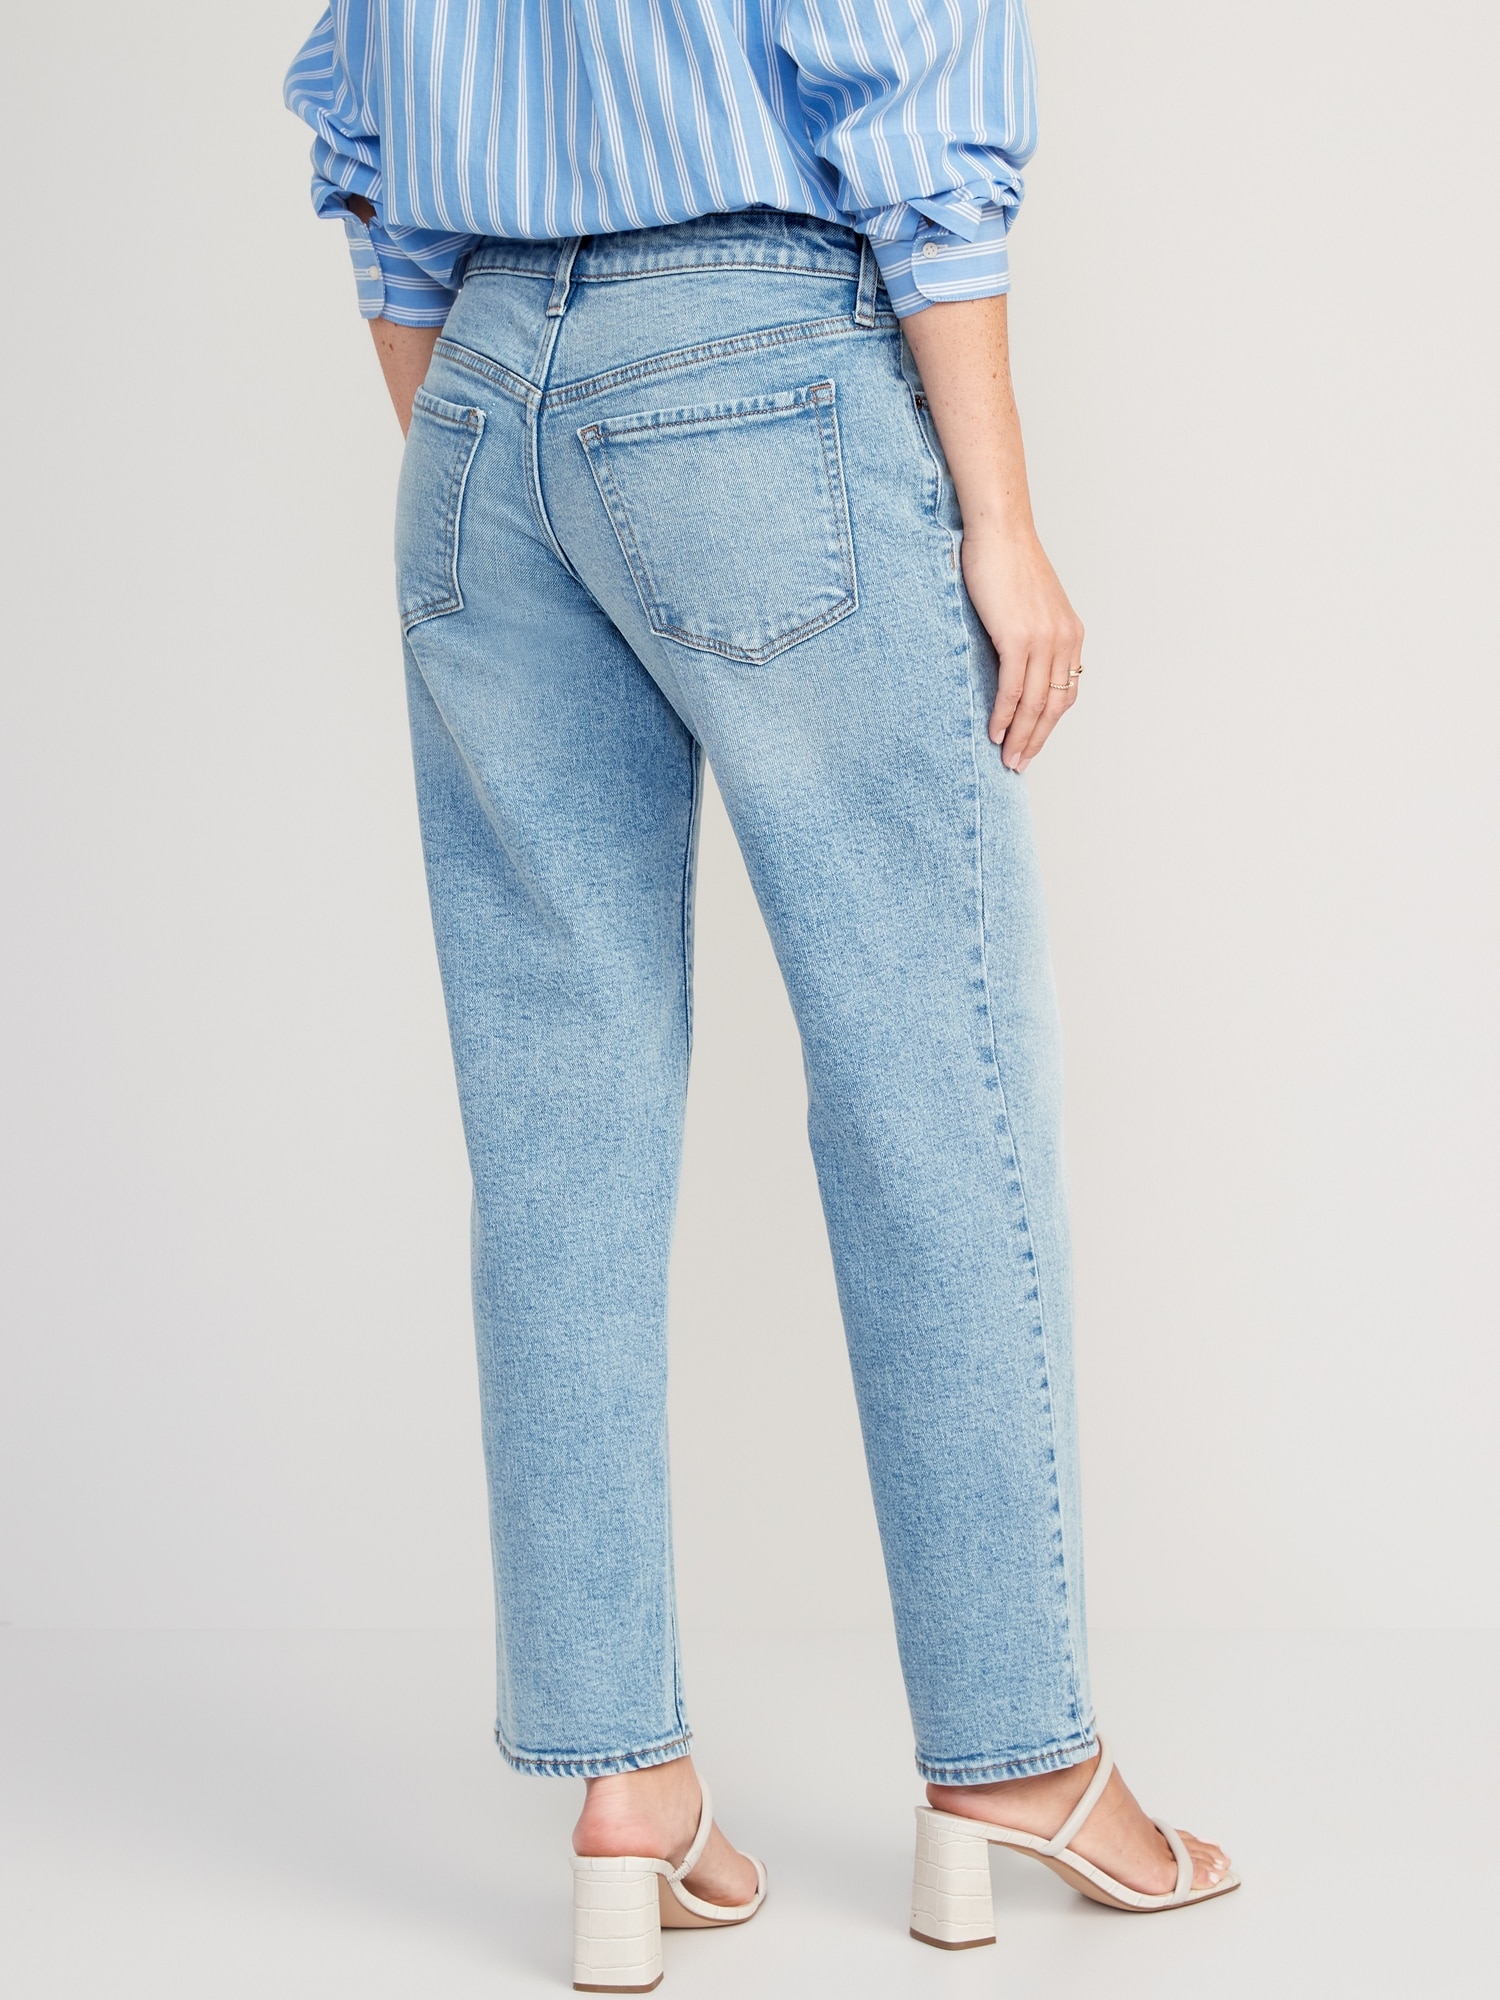 Low-Rise OG Loose Jeans for Women | Old Navy